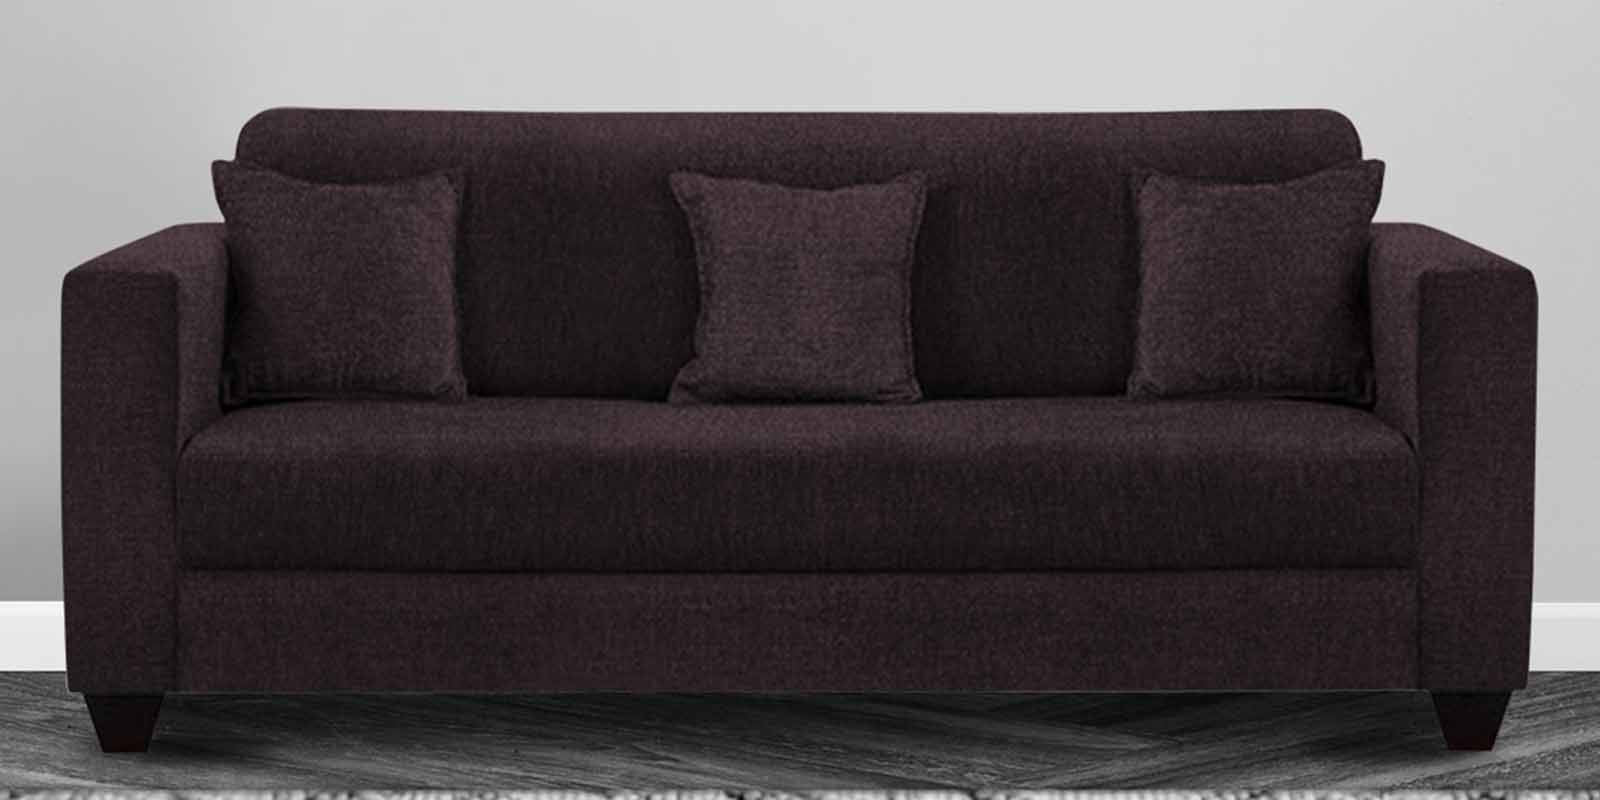 Nebula Fabric 3 Seater Sofa in Cara Brown Colour